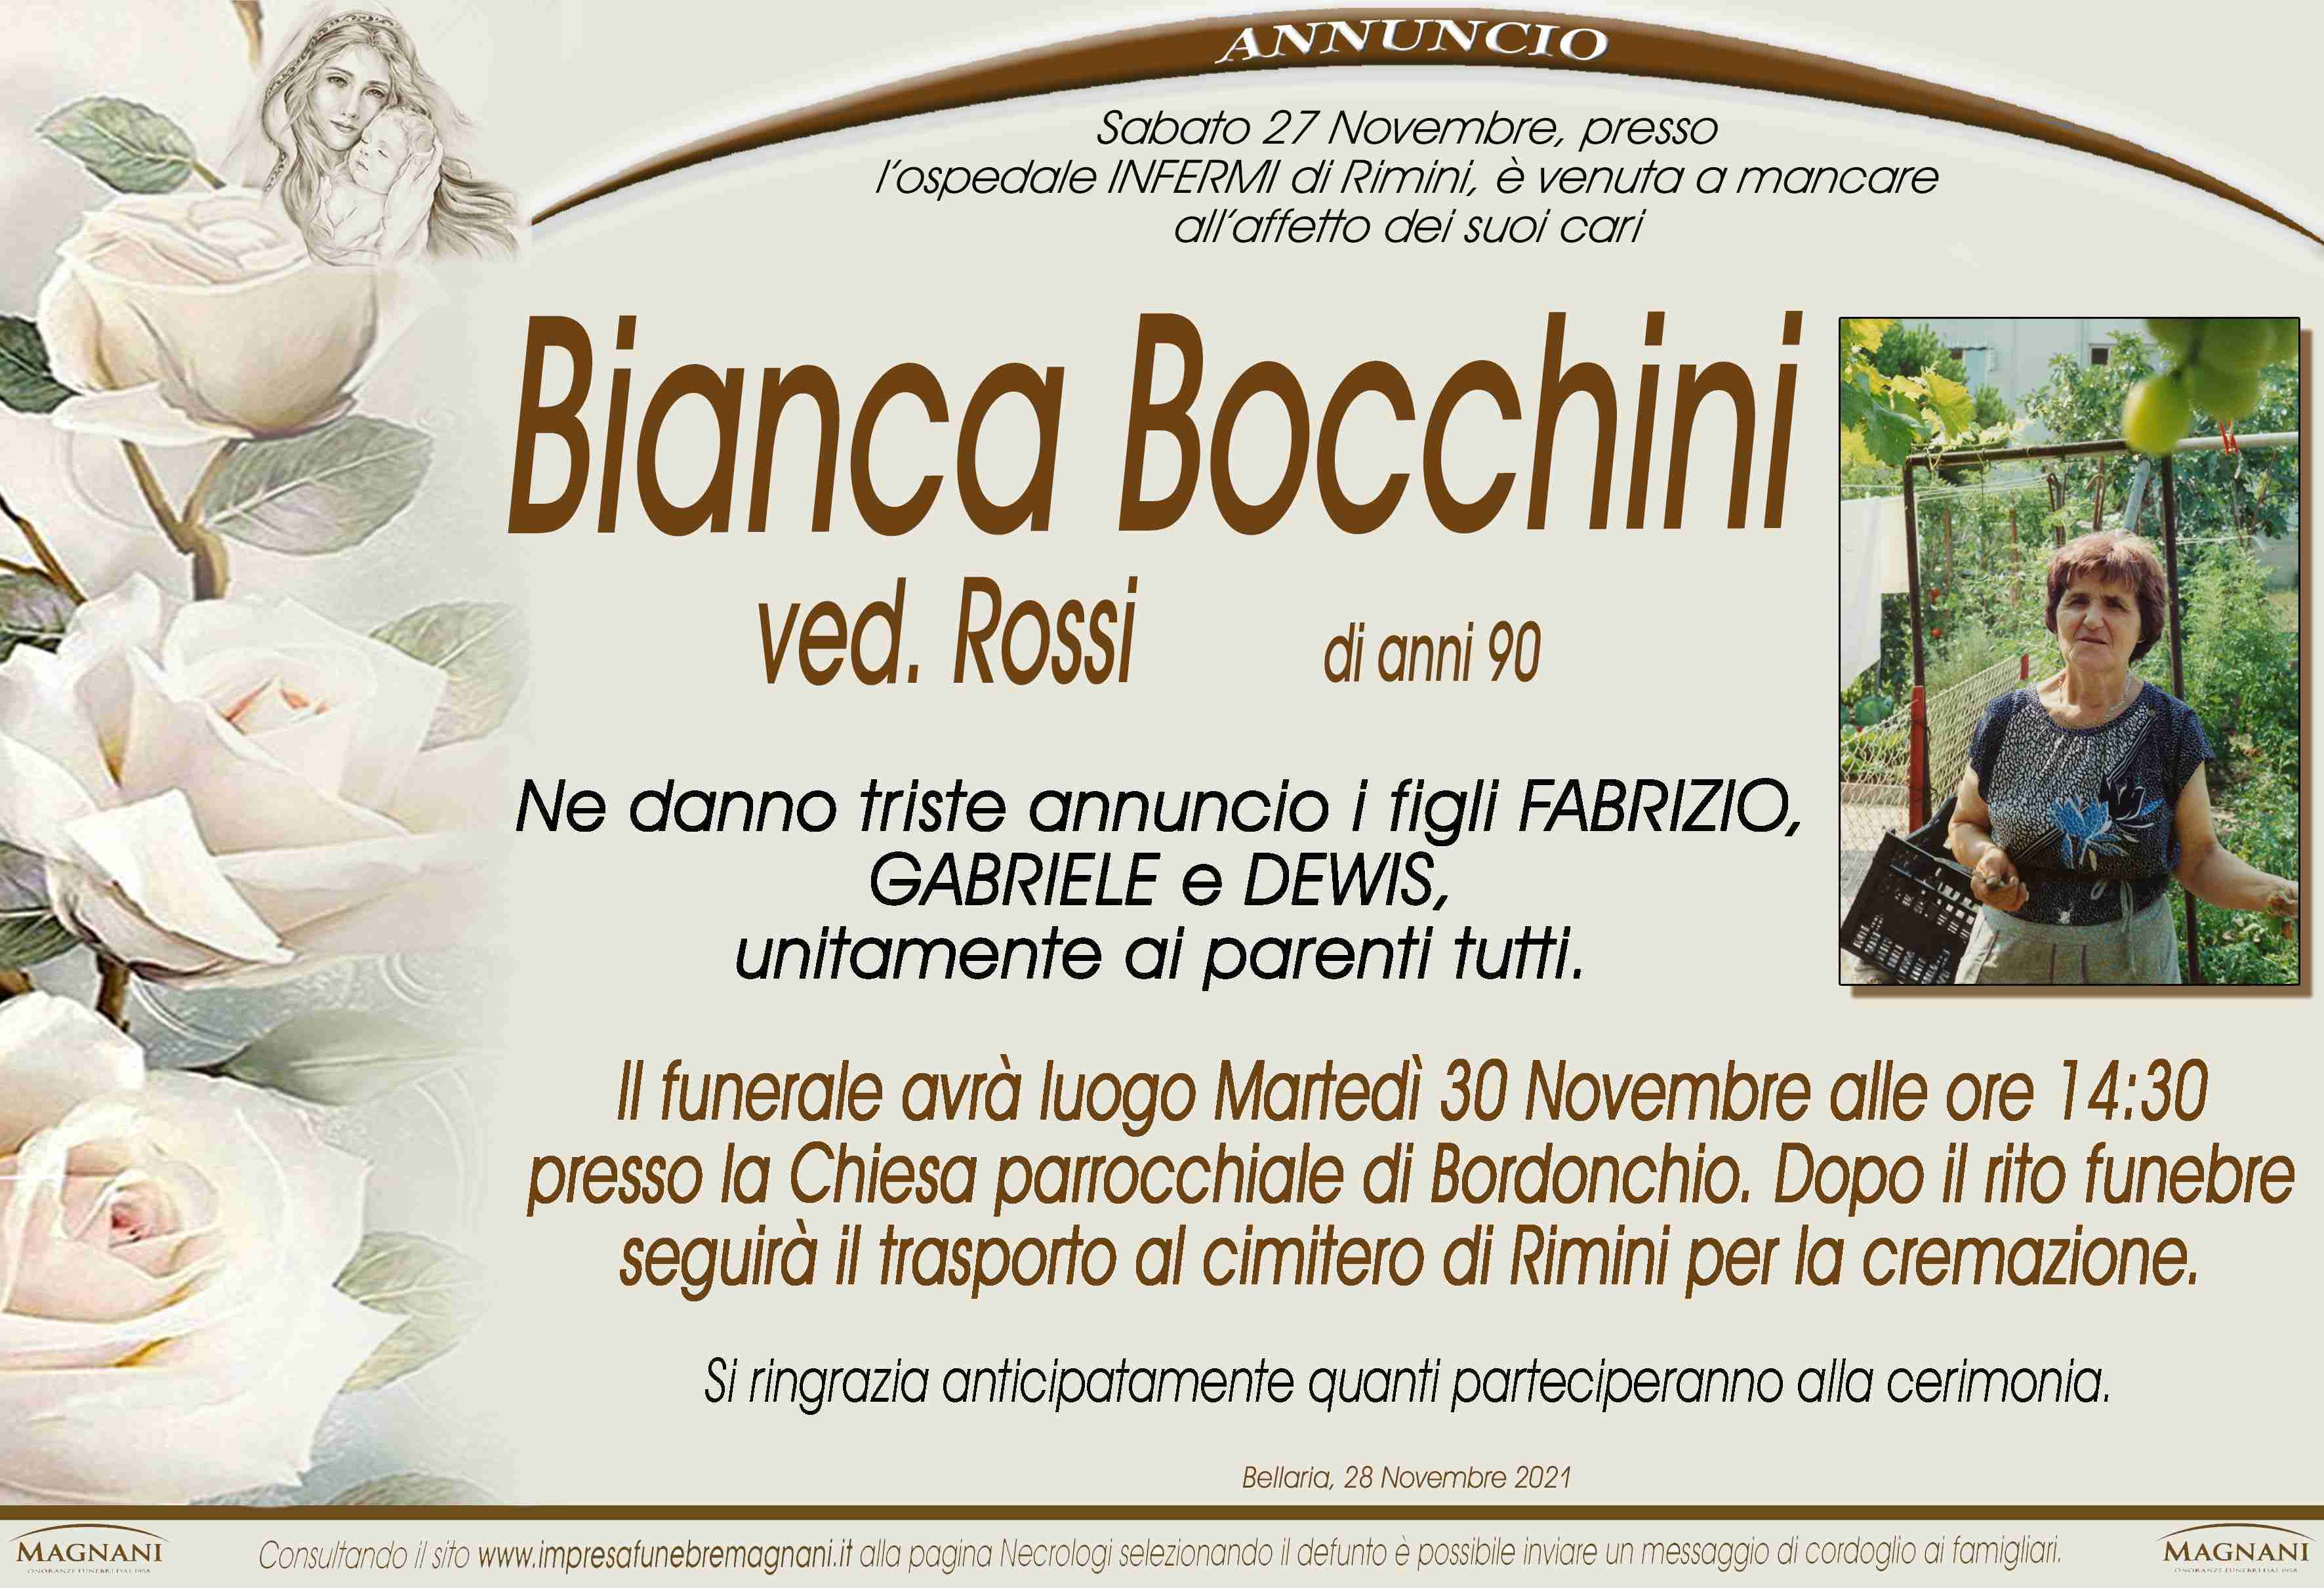 Bianca Bocchini